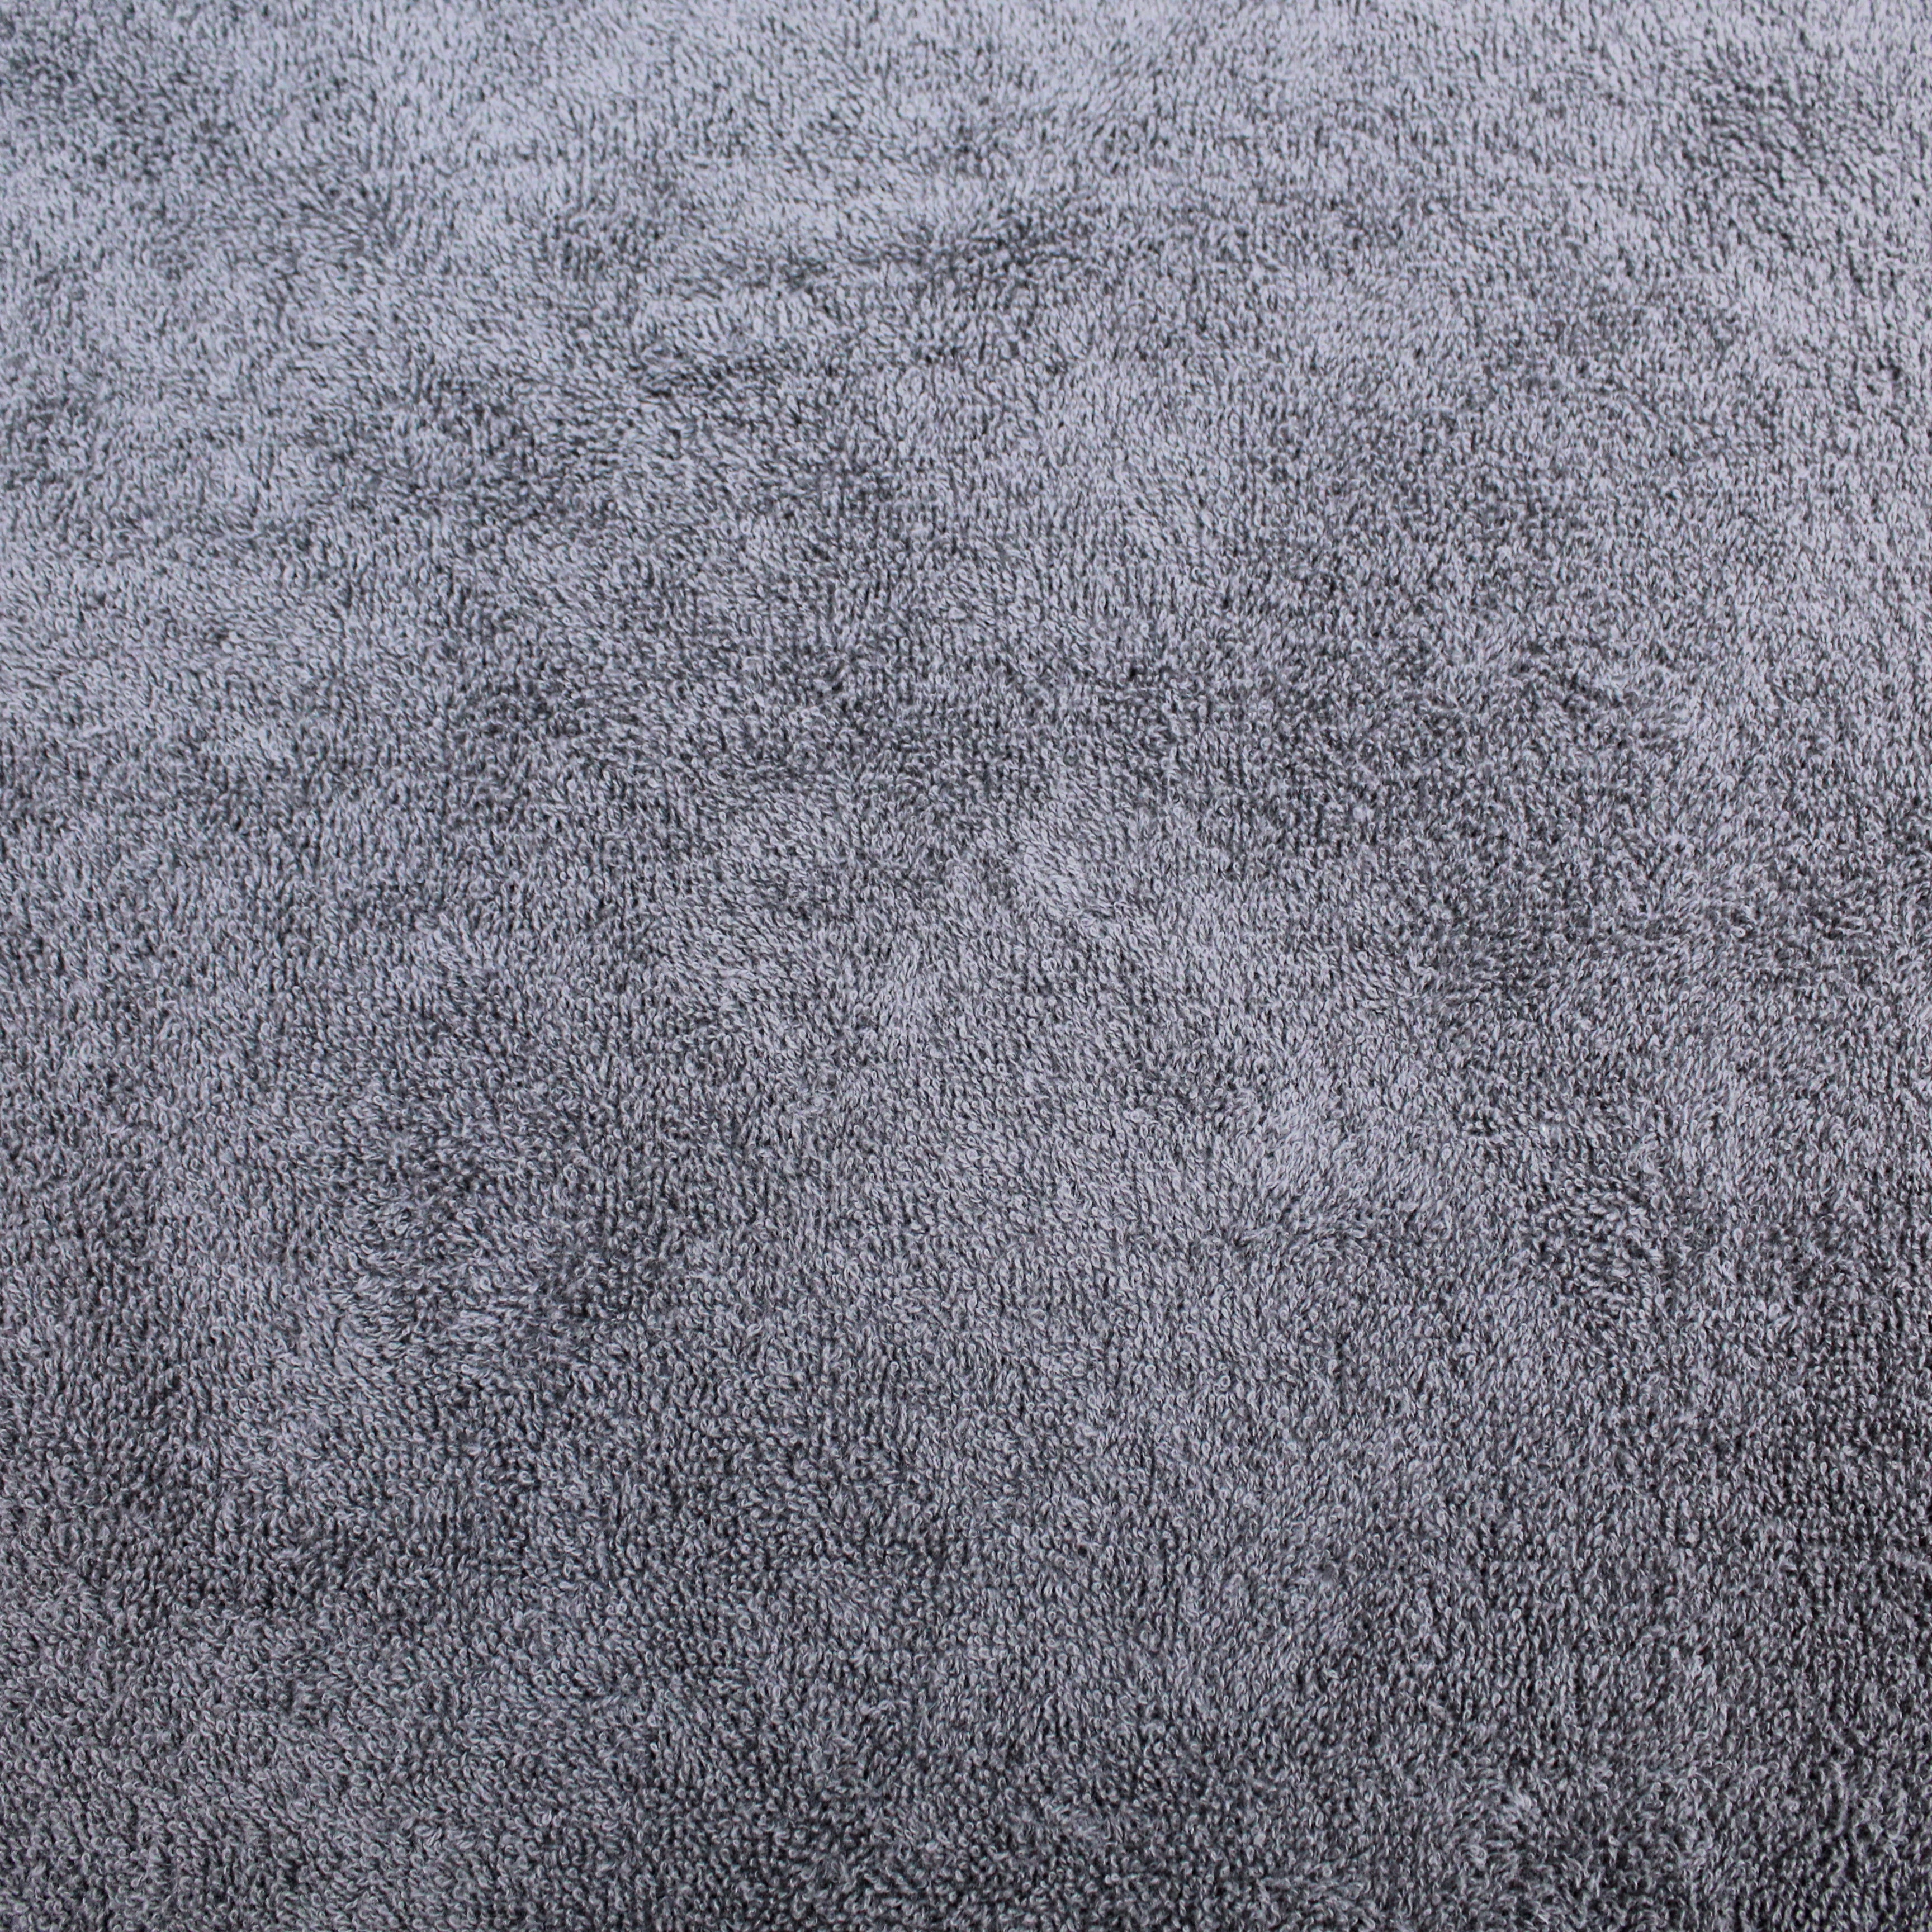 OEKO-TEX® Certified Premium Quality Cotton Towelling Double Sided - Dark Grey